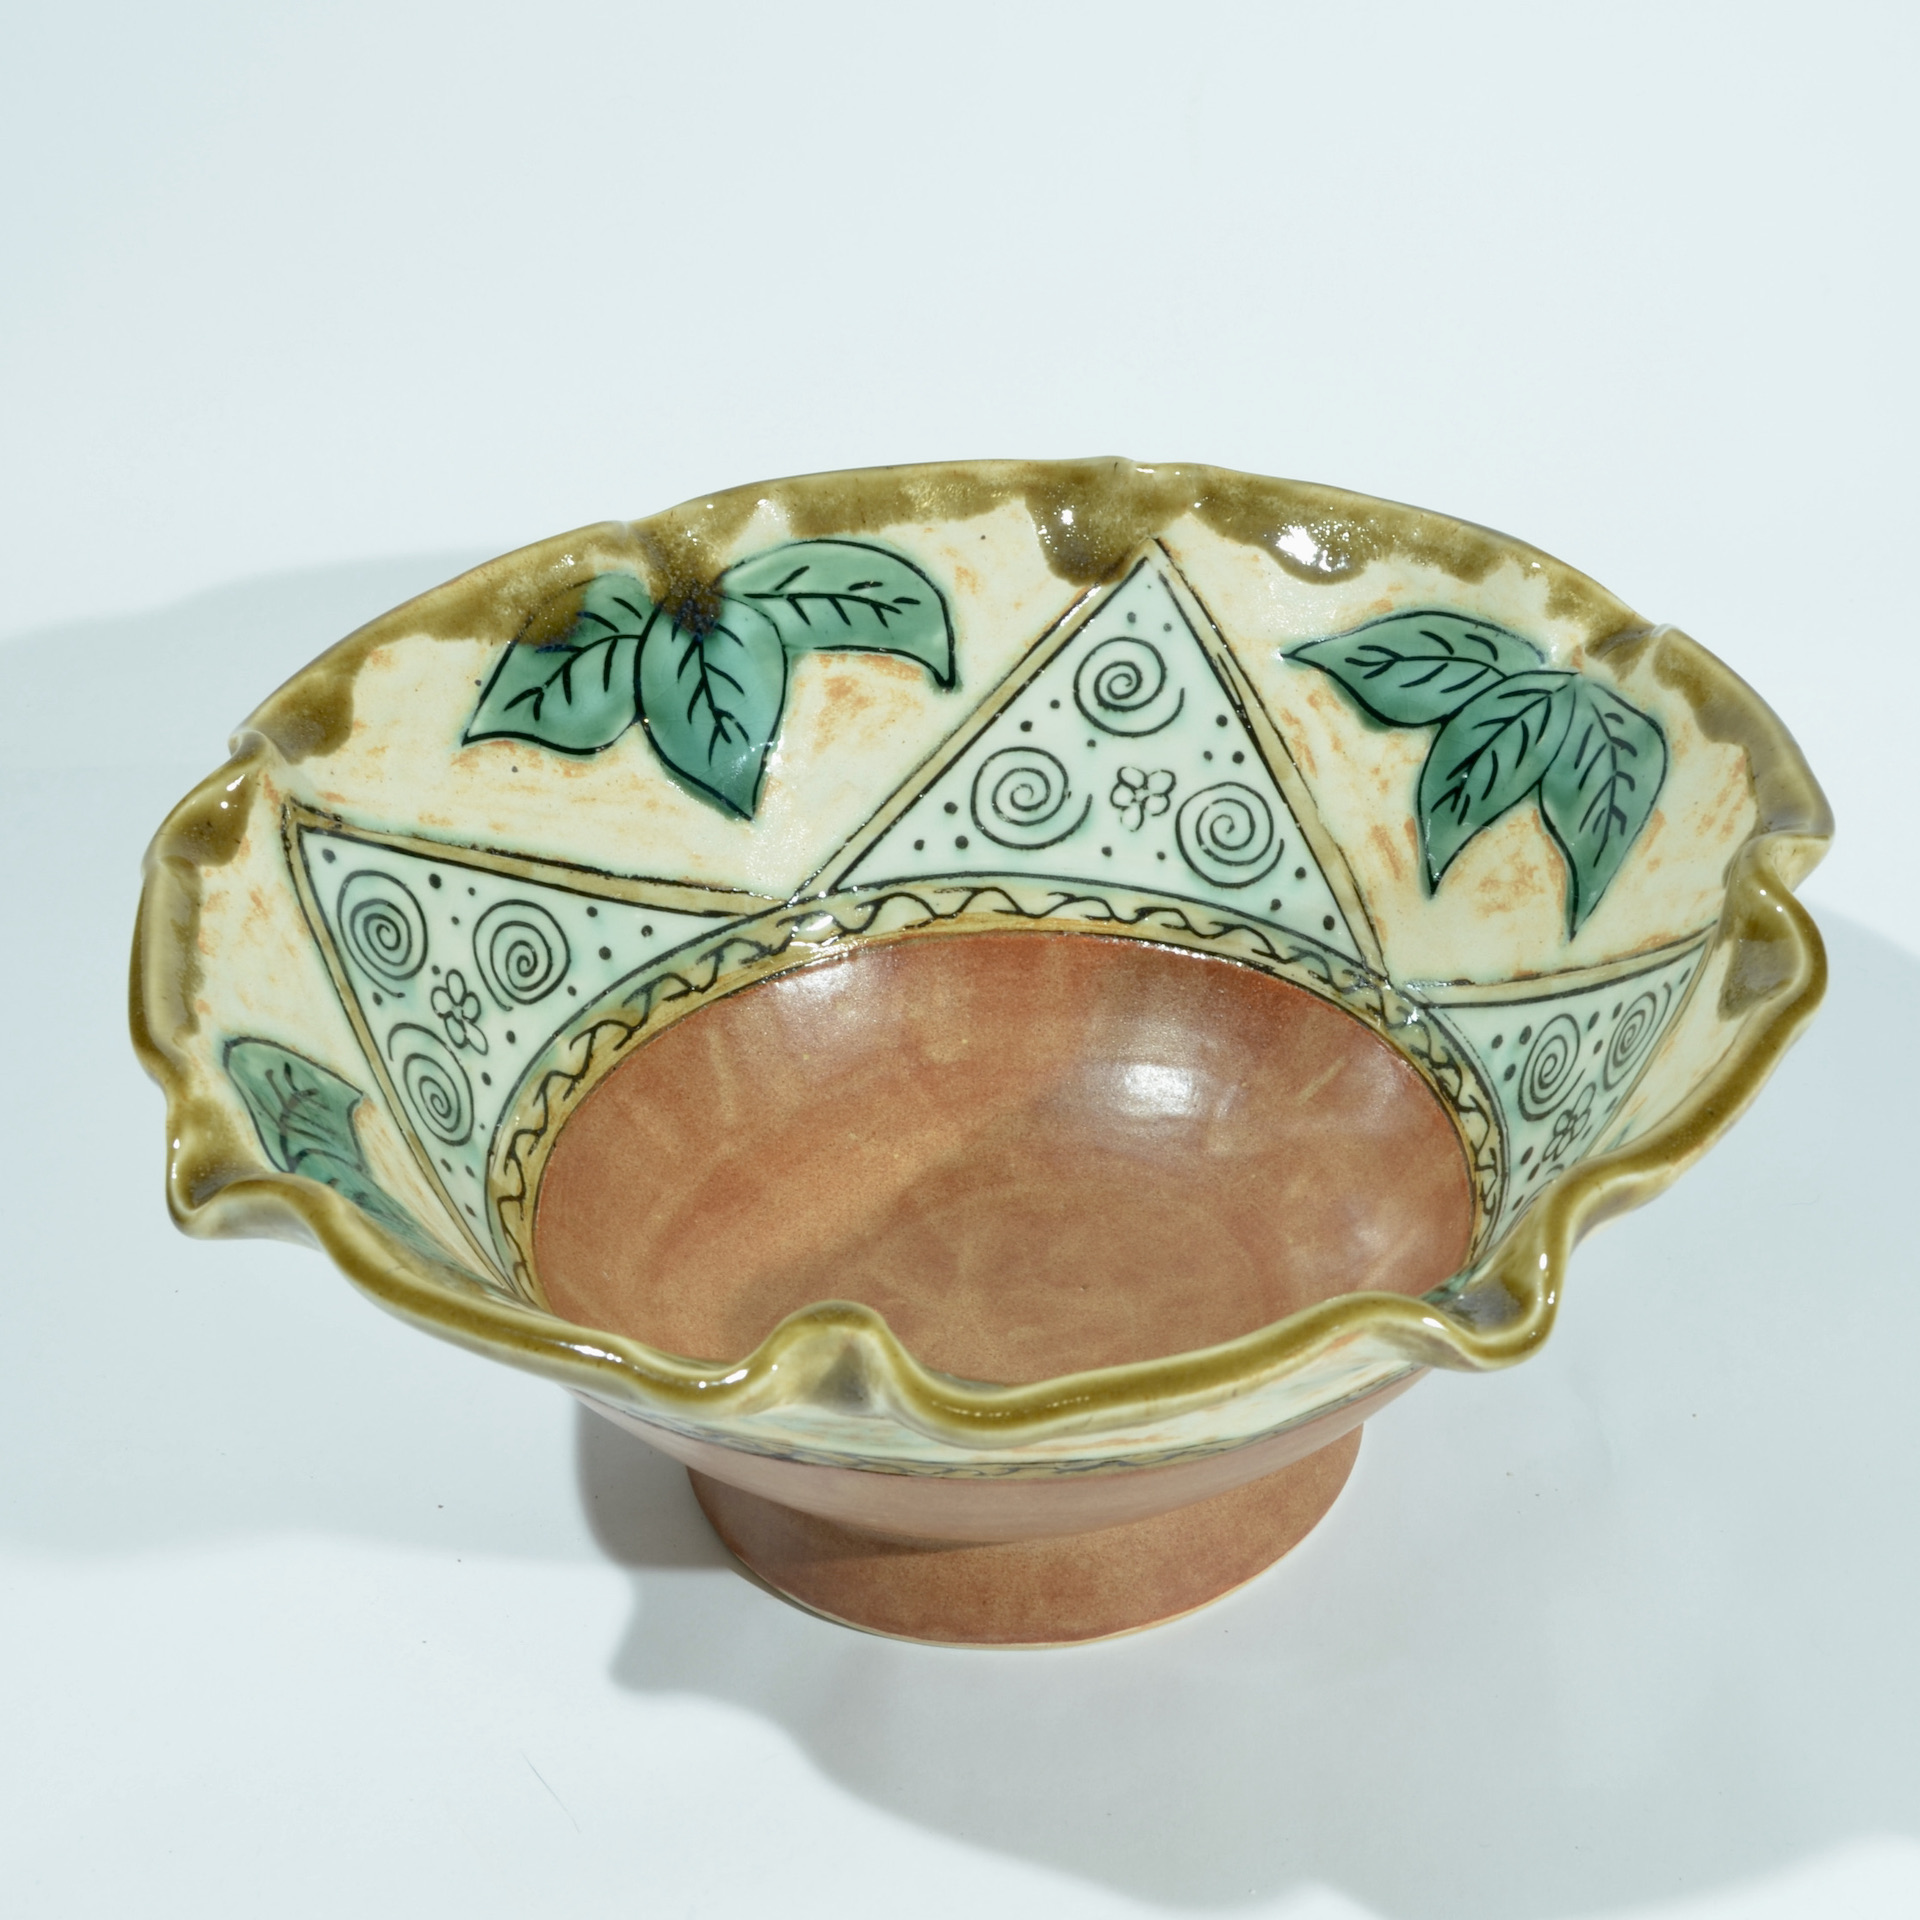 Iris Grundler Pottery